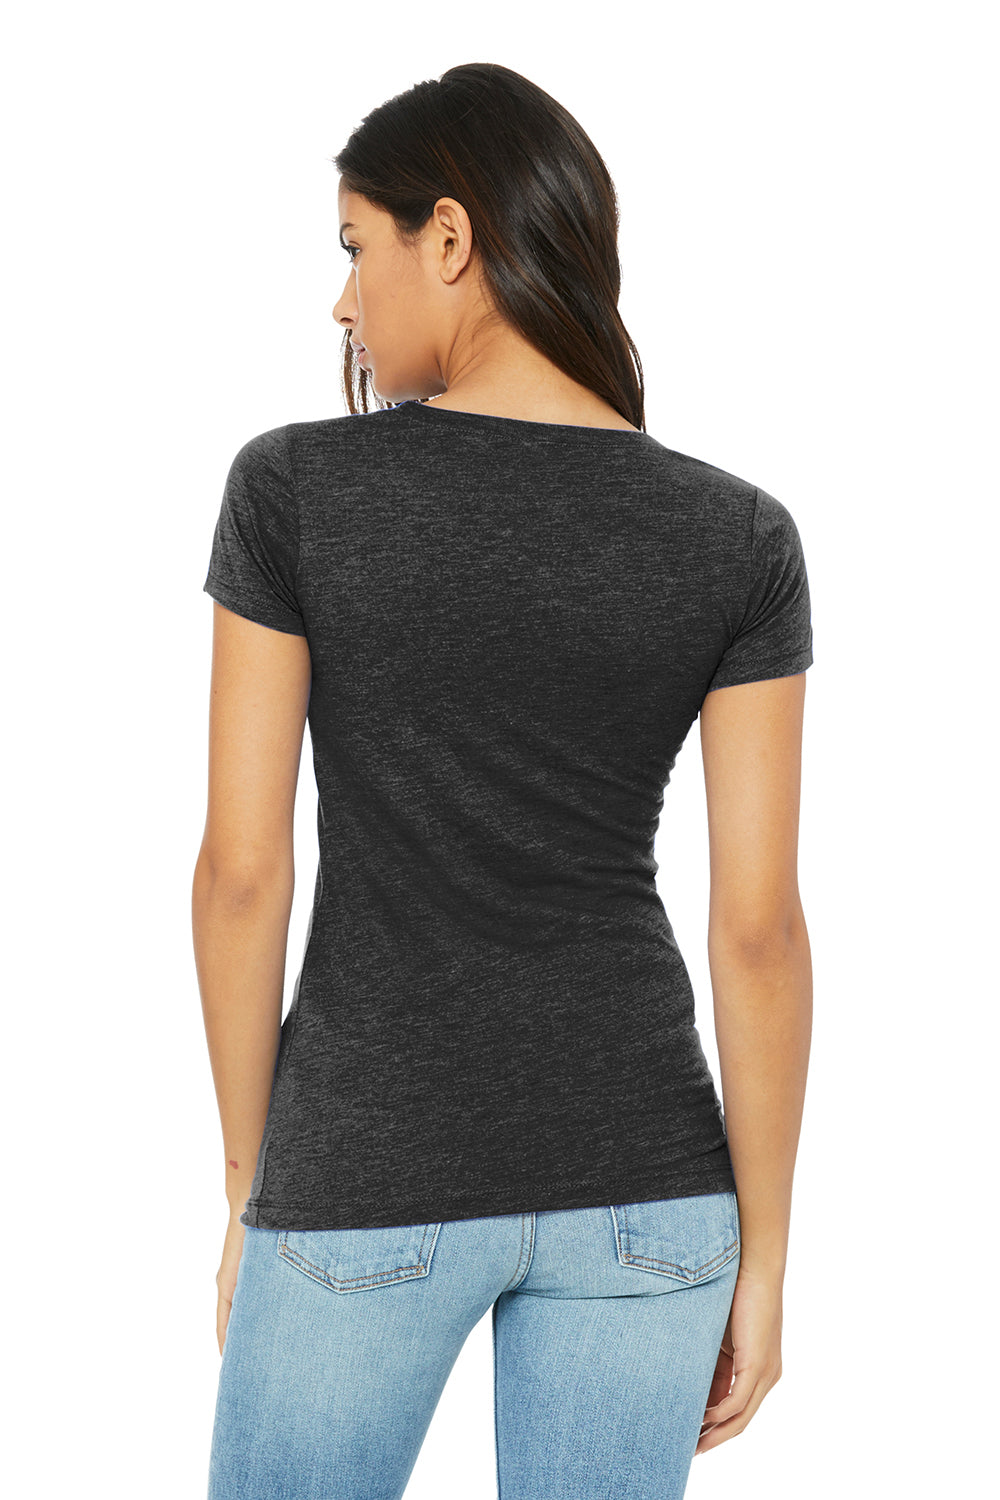 Bella + Canvas BC8413/B8413/8413 Womens Short Sleeve Crewneck T-Shirt Charcoal Black Model Back